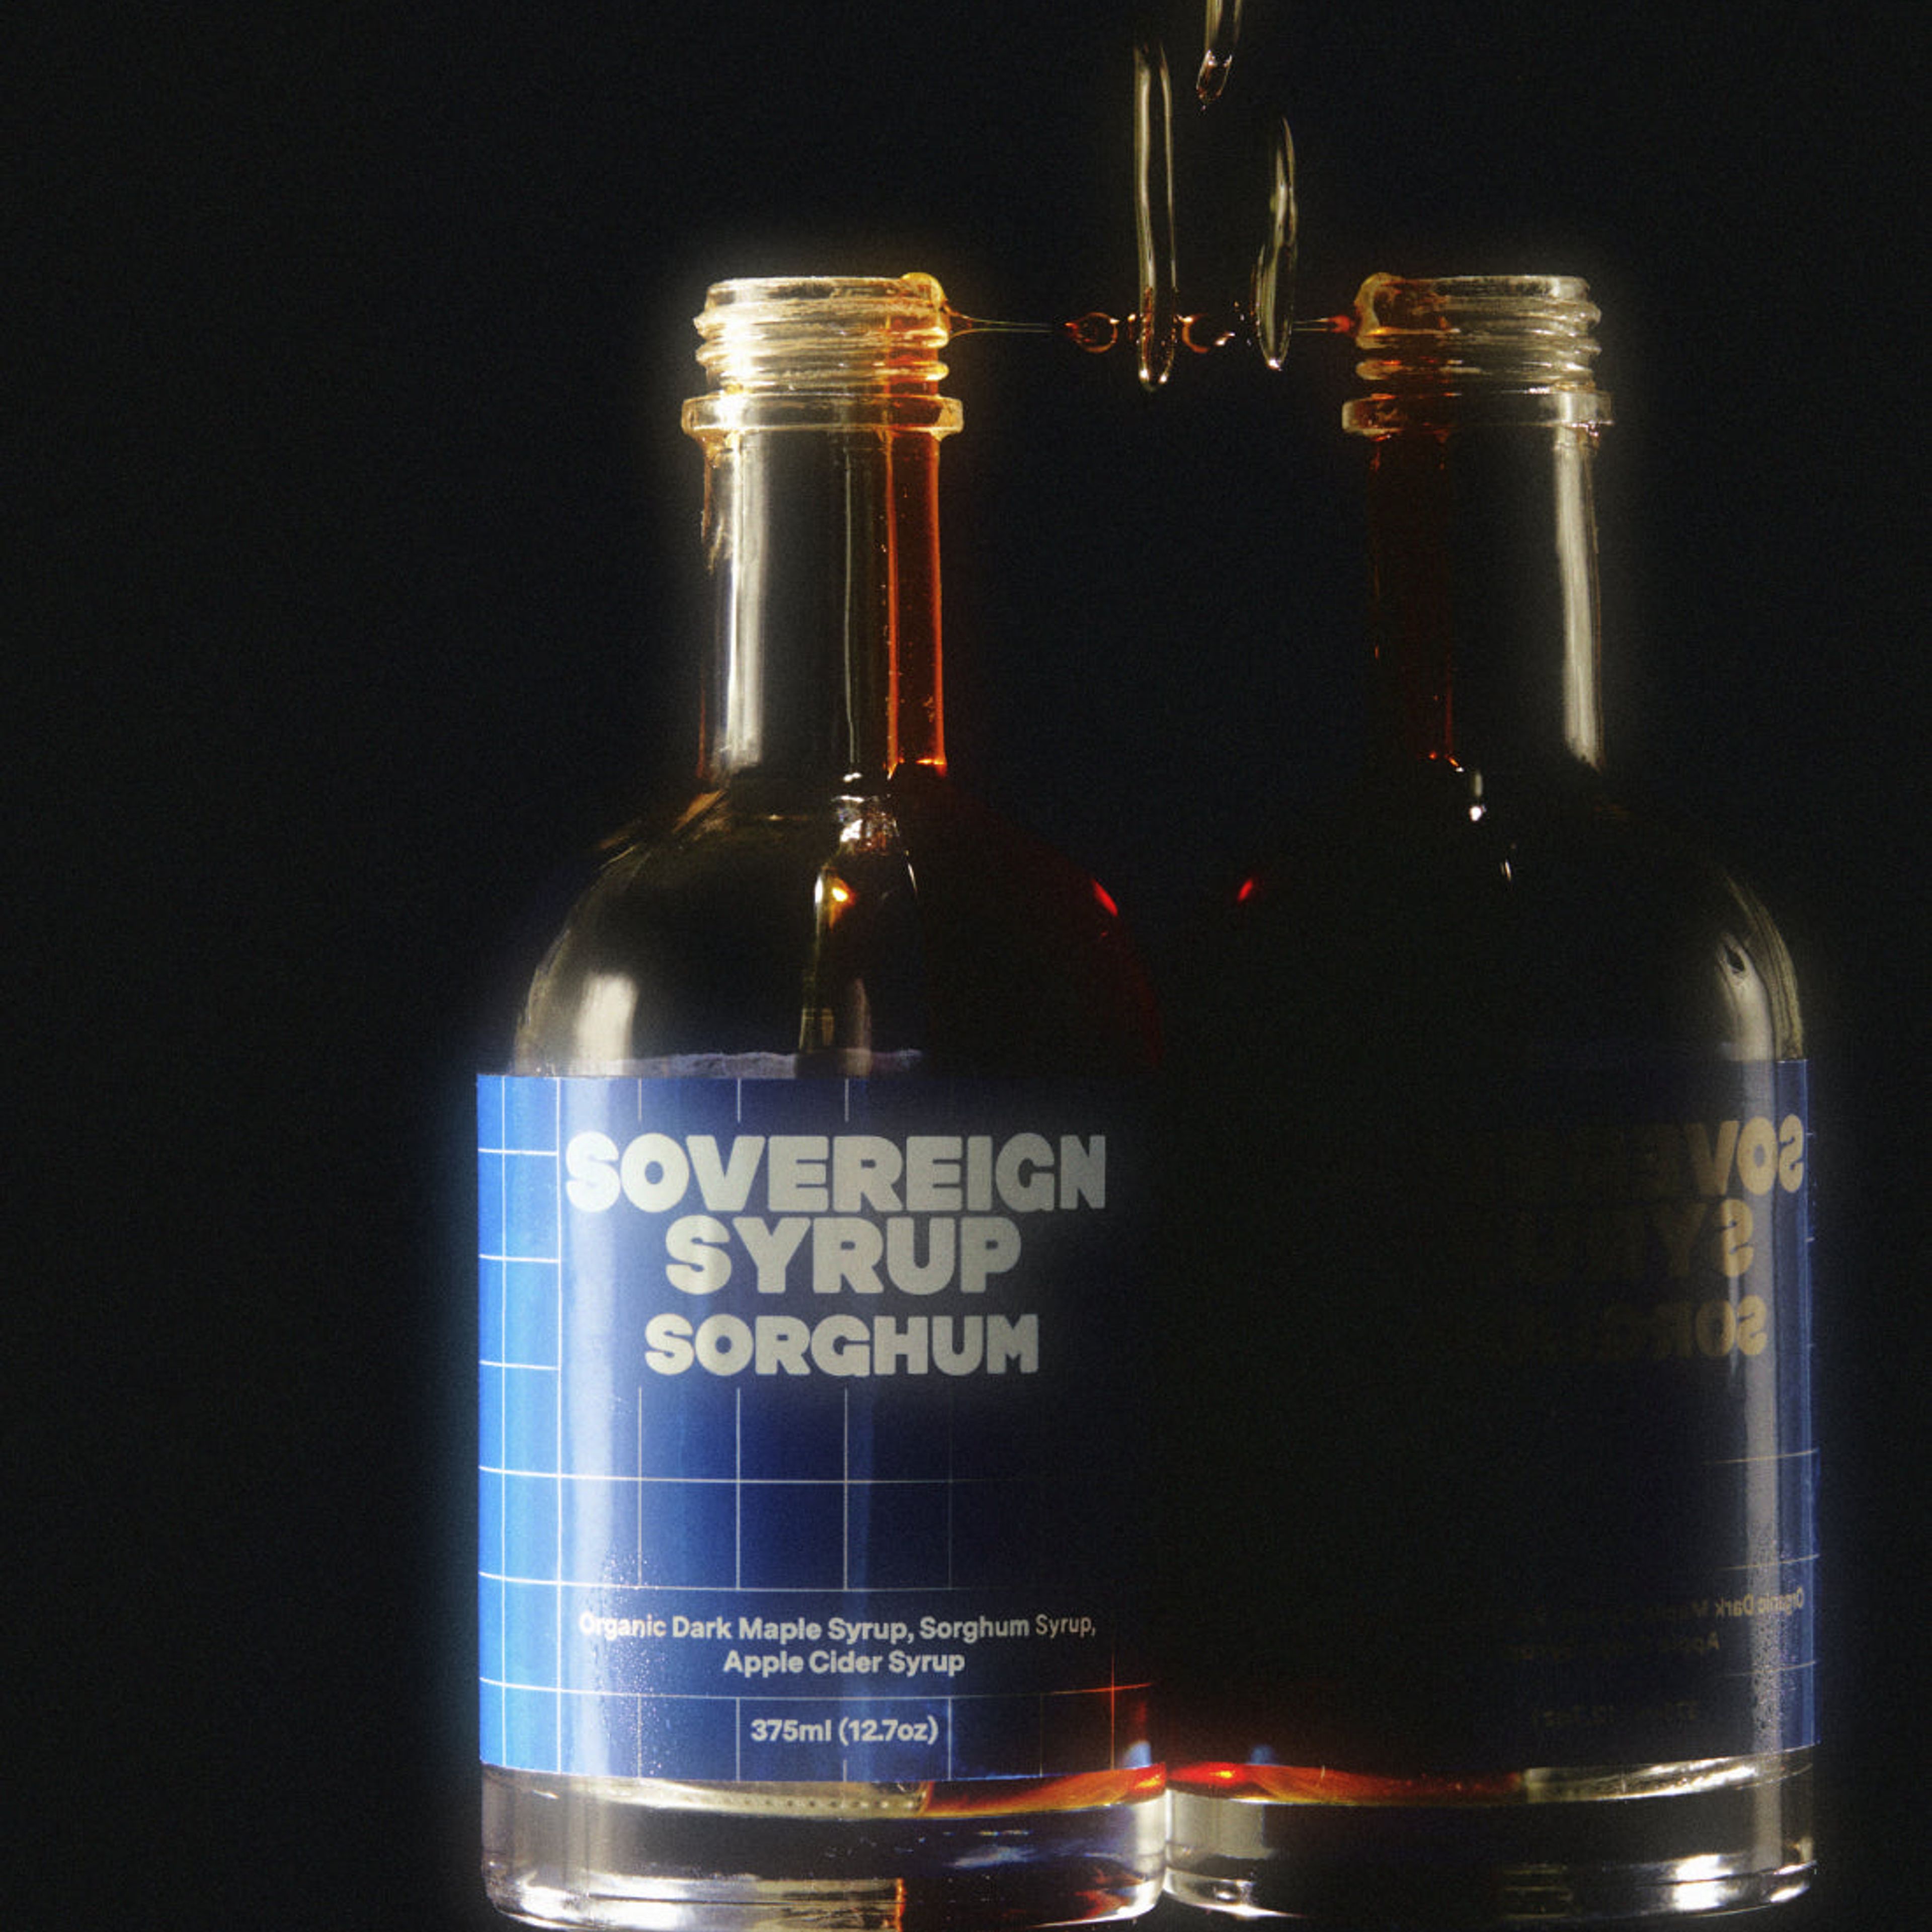 Sovereign Syrup Sorghum